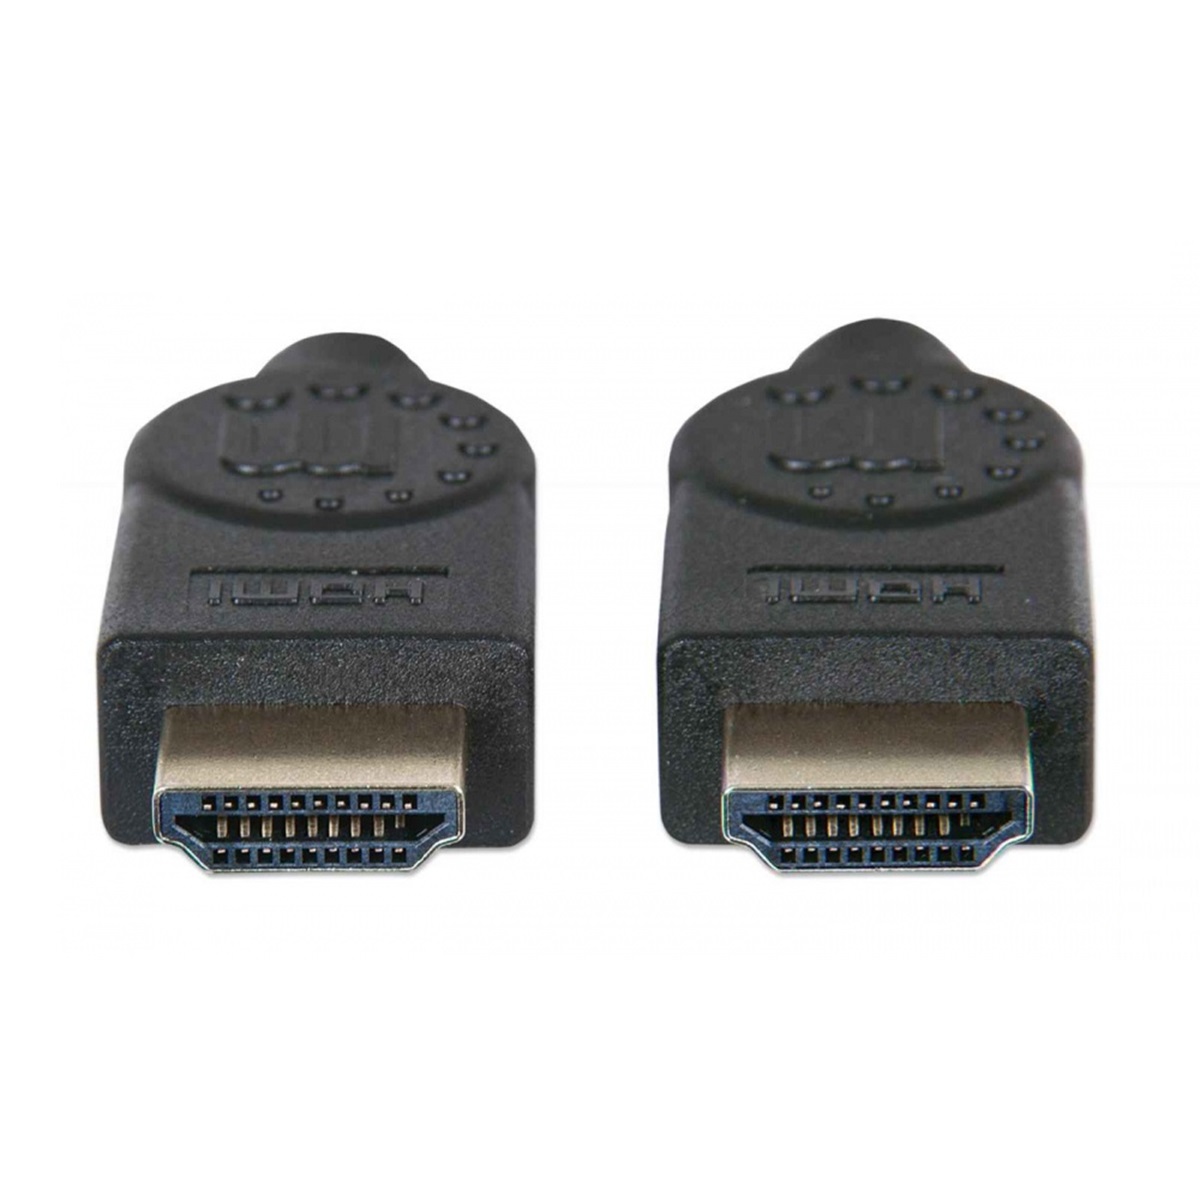 Cable Hdmi A Hdmi 3m Linx Plus Ch230 Essential Series 4k - Largo Del Cable  3metros. Color: Negro. Ac-934794